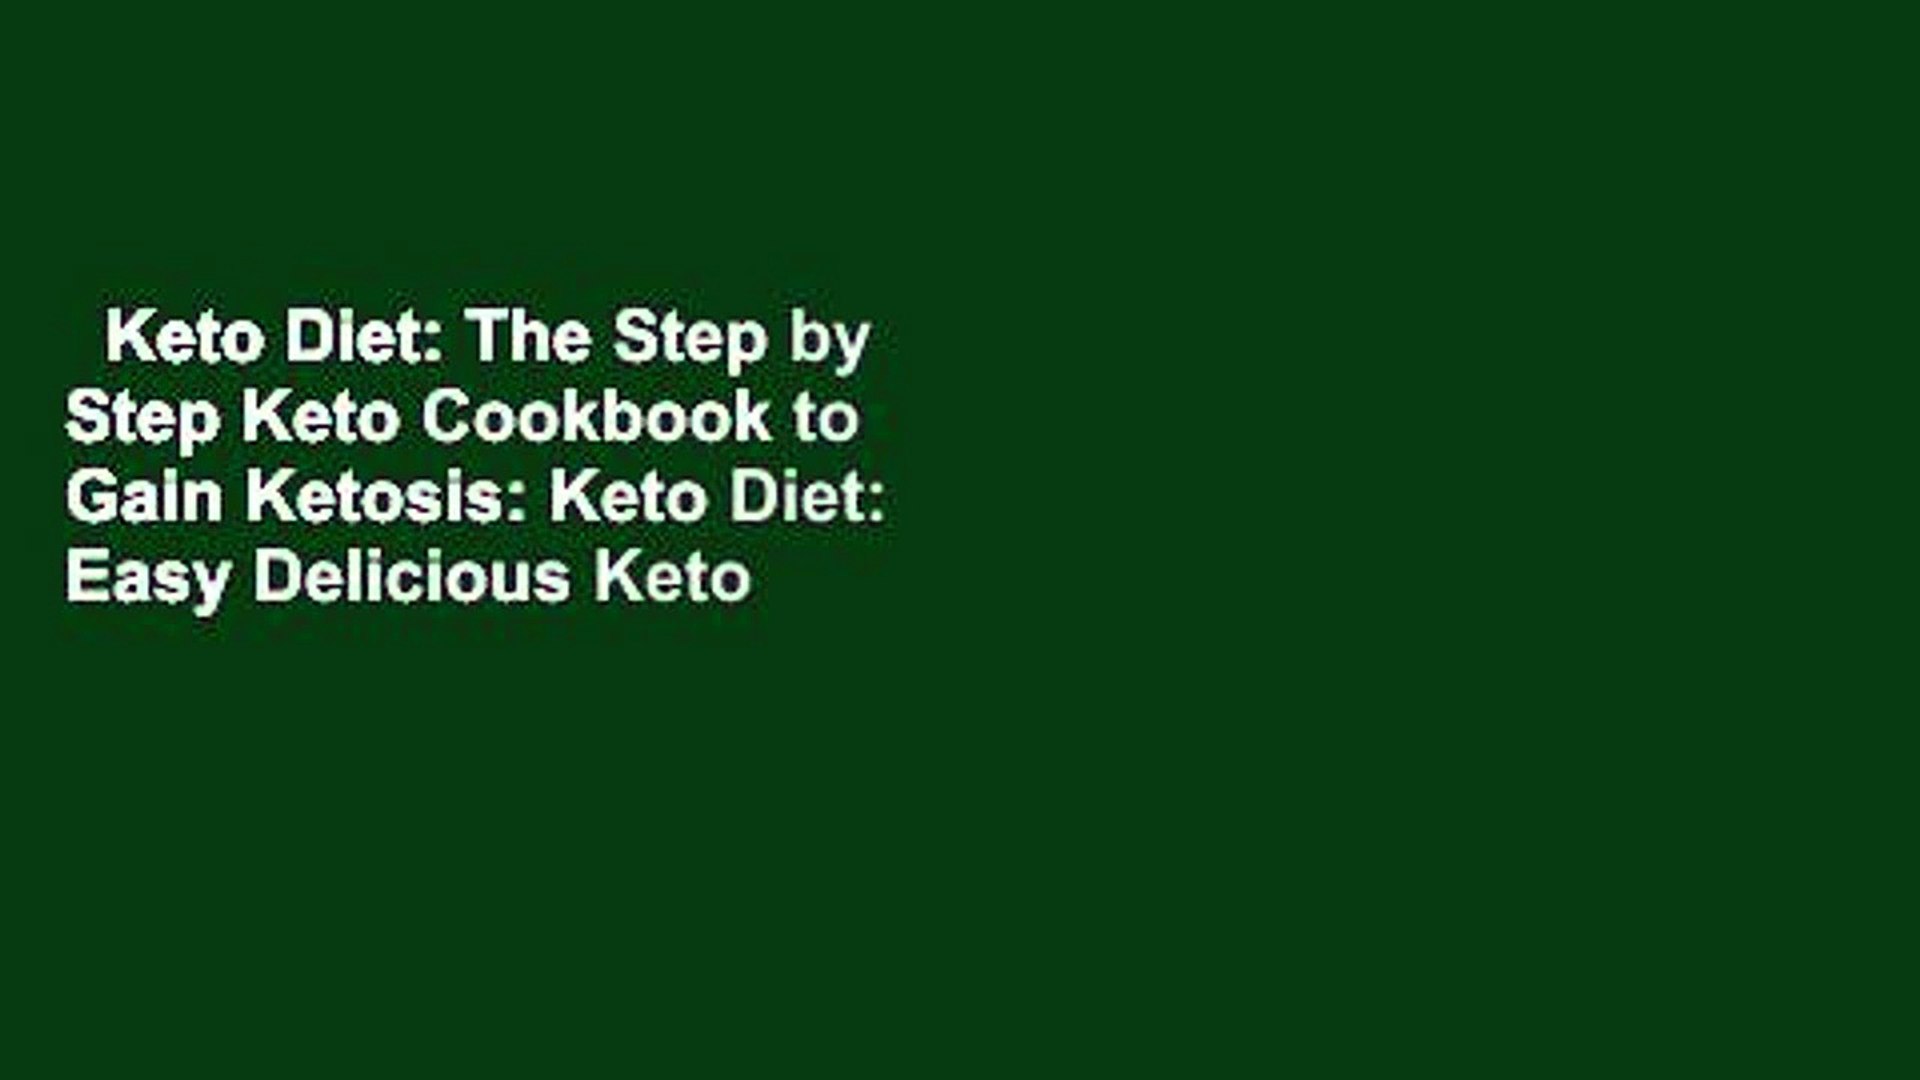 Keto Diet: The Step by Step Keto Cookbook to Gain Ketosis: Keto Diet: Easy Delicious Keto